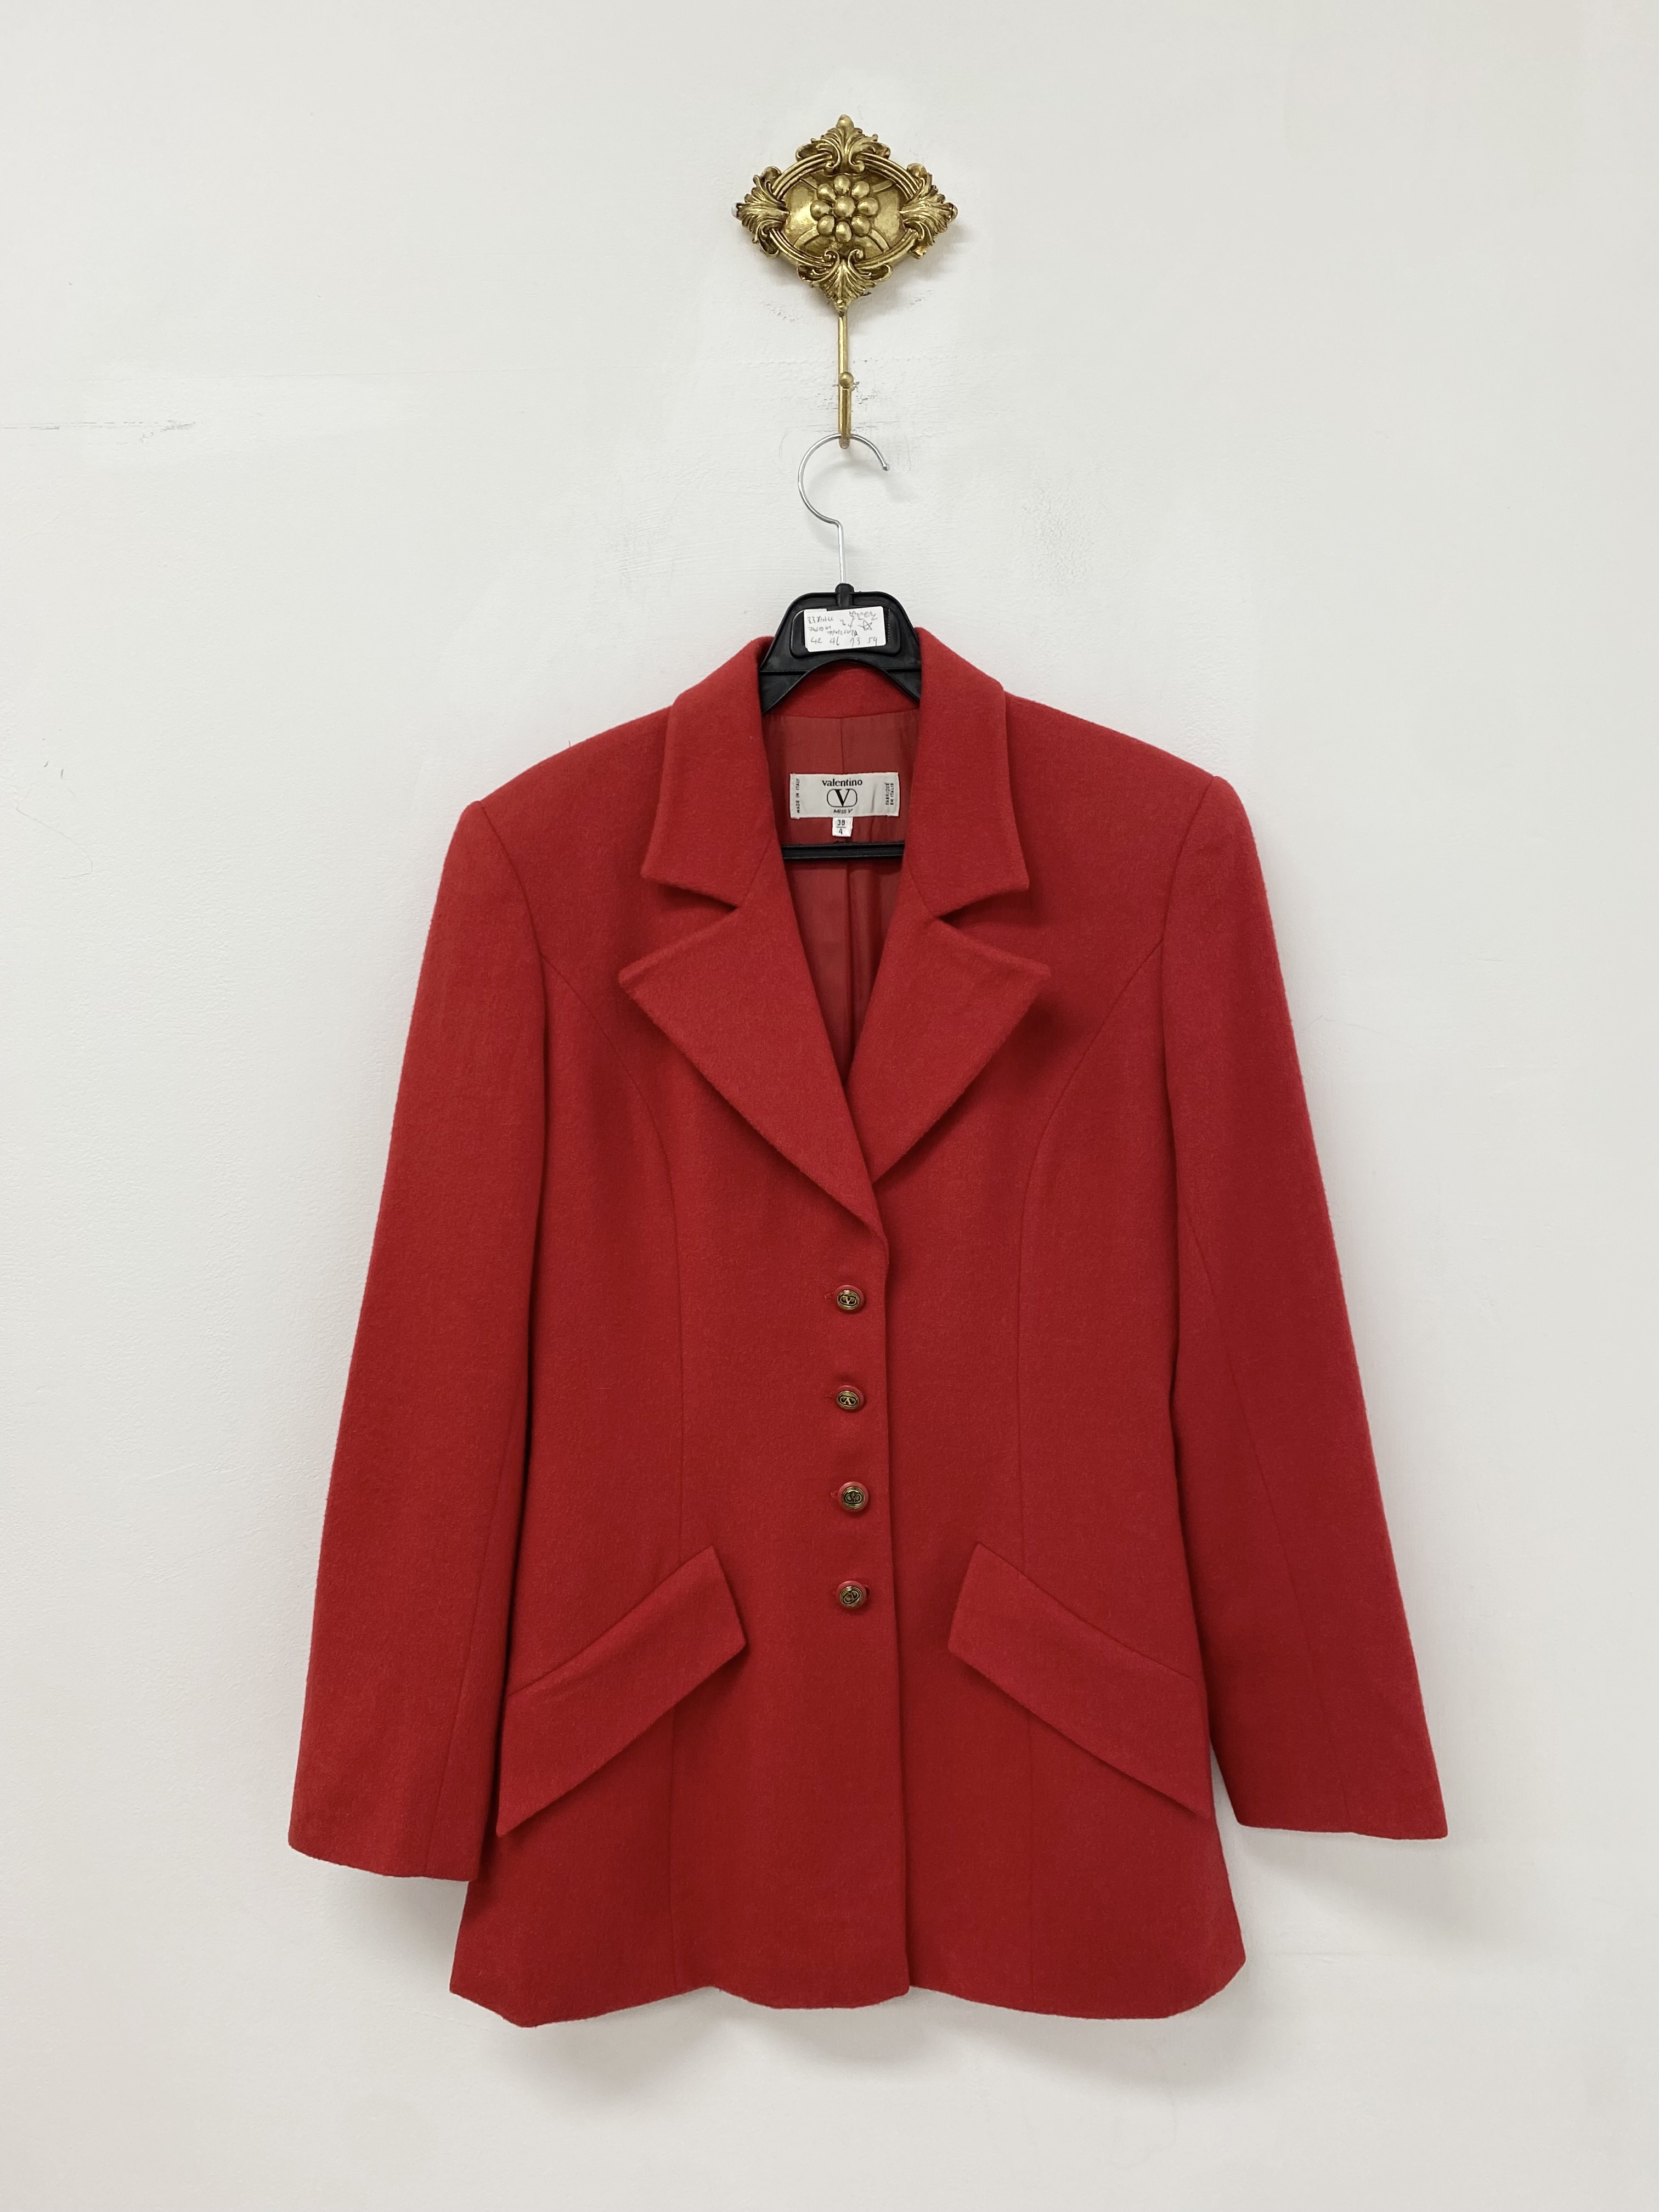 Valentino red cashmere unique coat (made in italy)